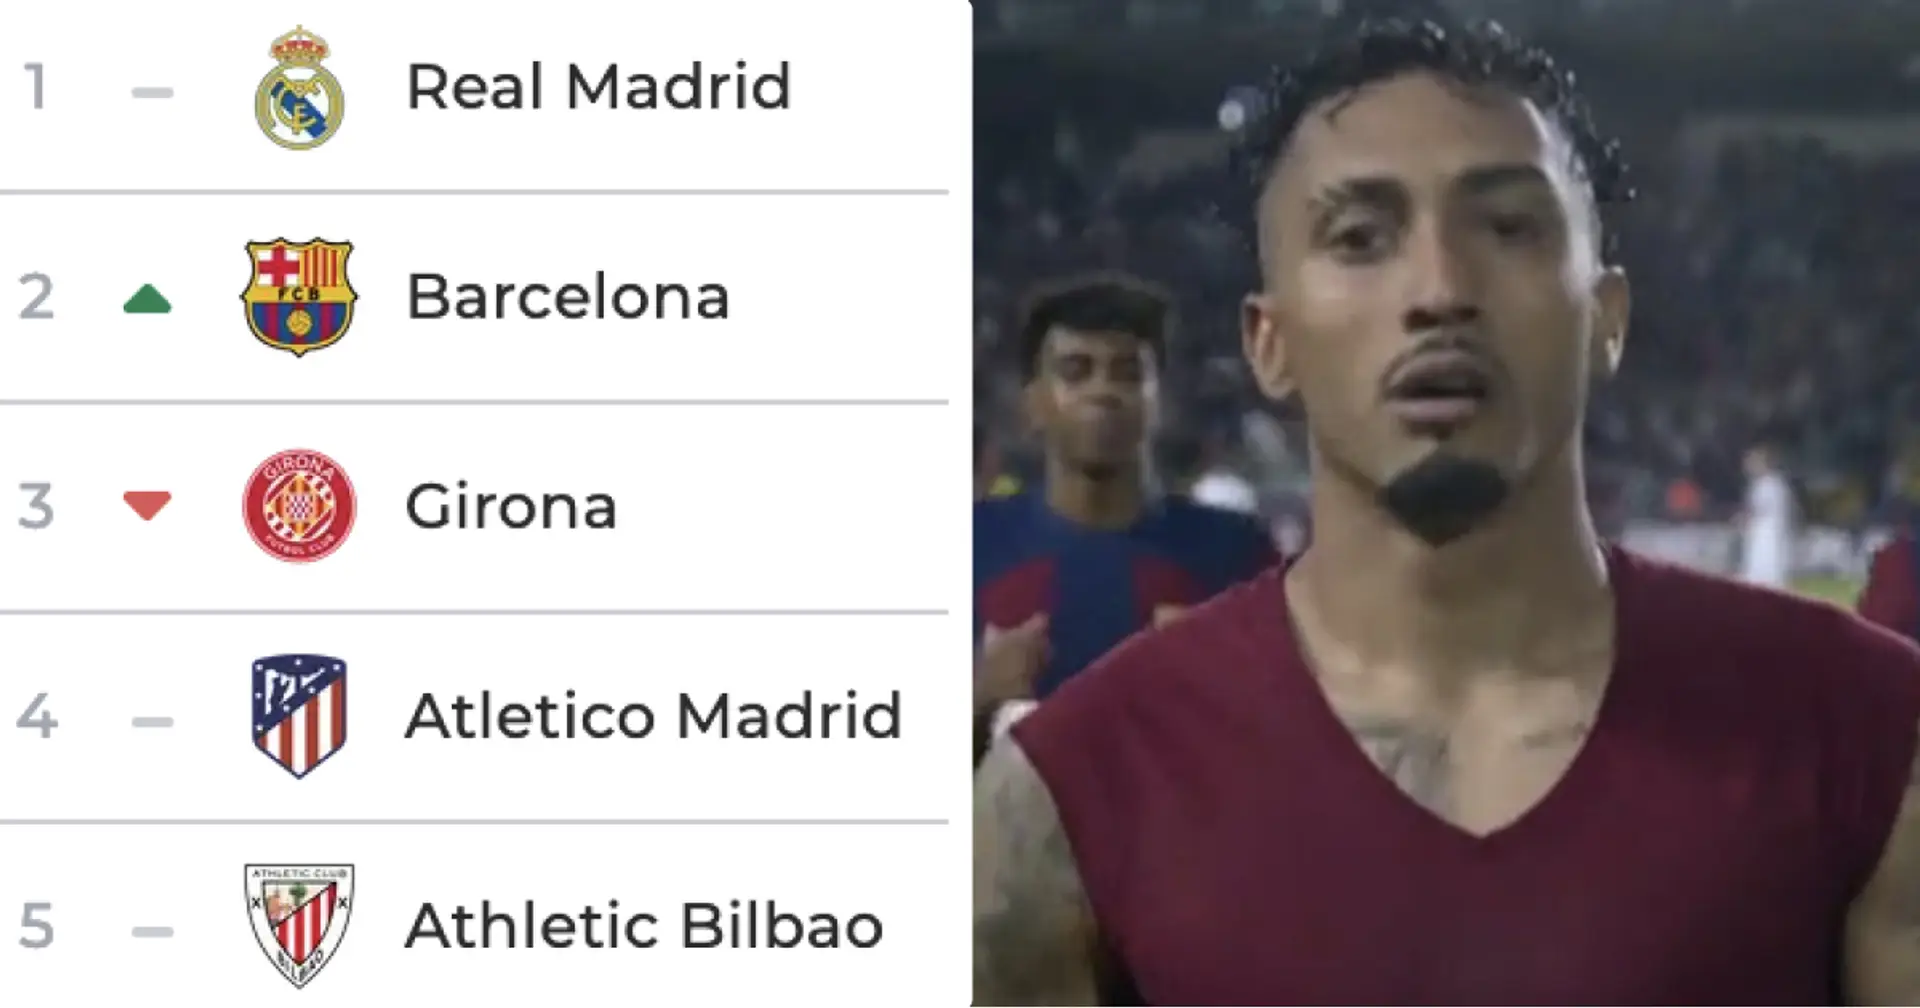 Barcelona back in 2nd place: La Liga standings